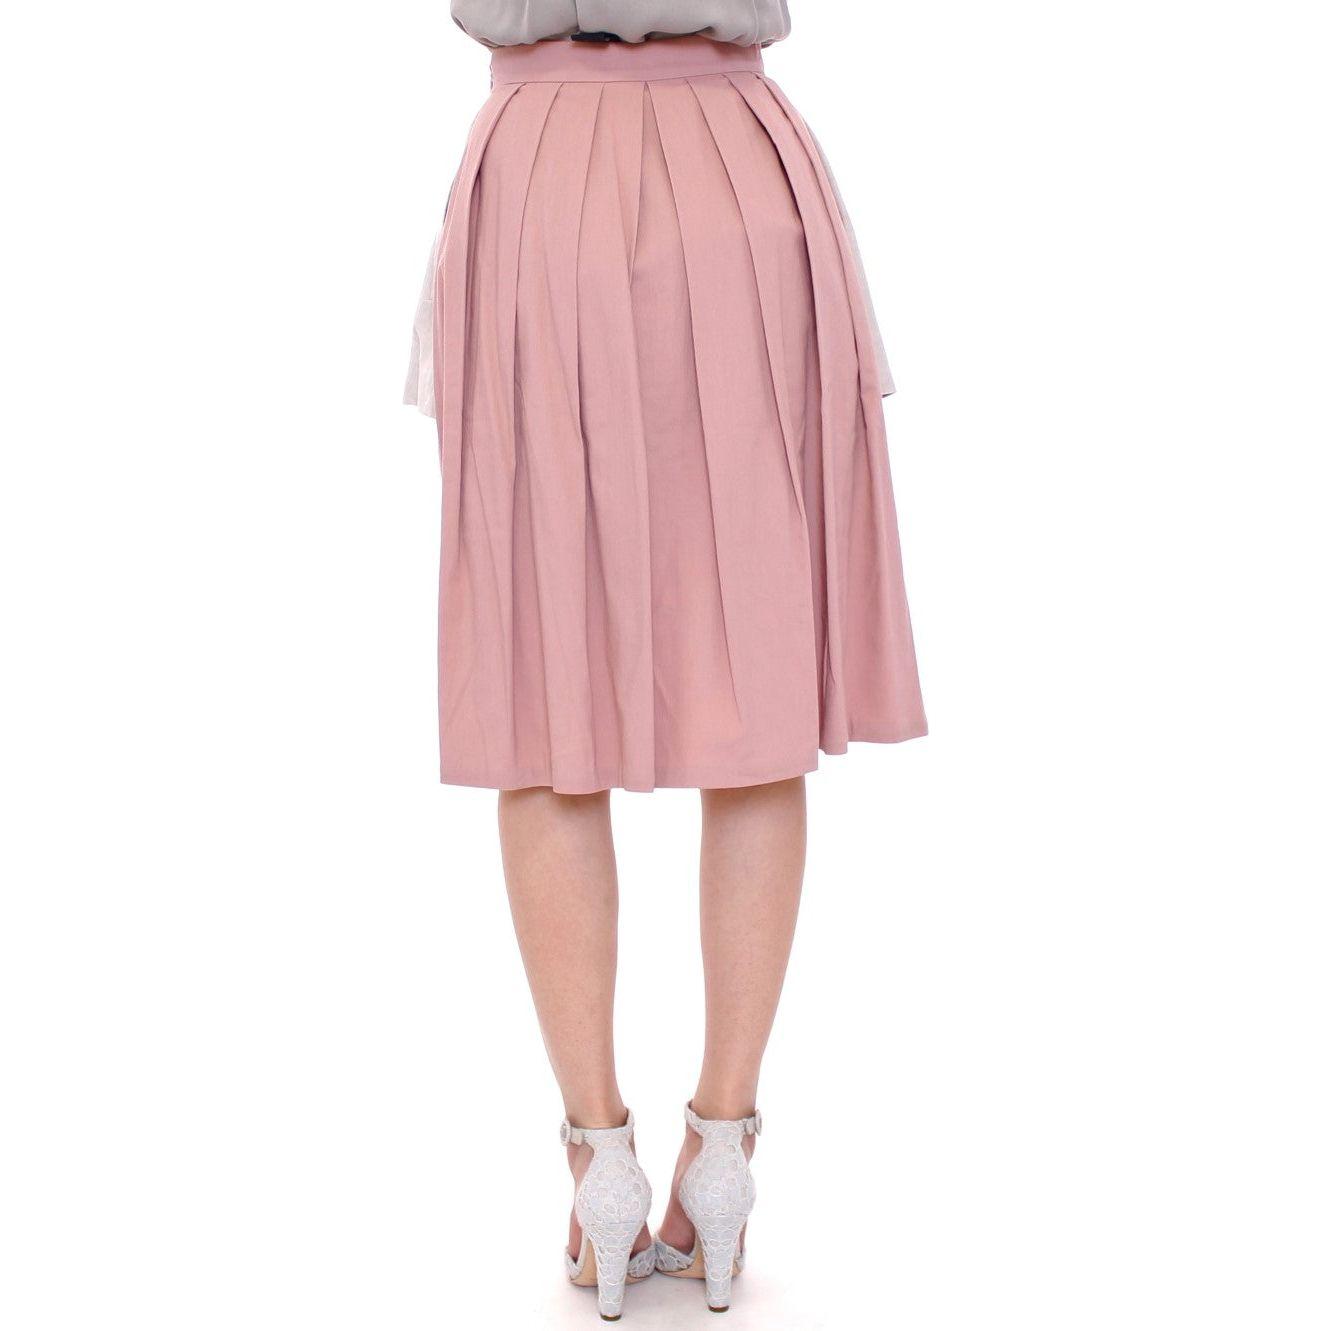 Comeforbreakfast Elegant Pleated Knee-length Skirt in Pink and Gray pink-gray-knee-length-pleated-skirt 219749-pink-gray-knee-length-pleated-skirt-2.jpg